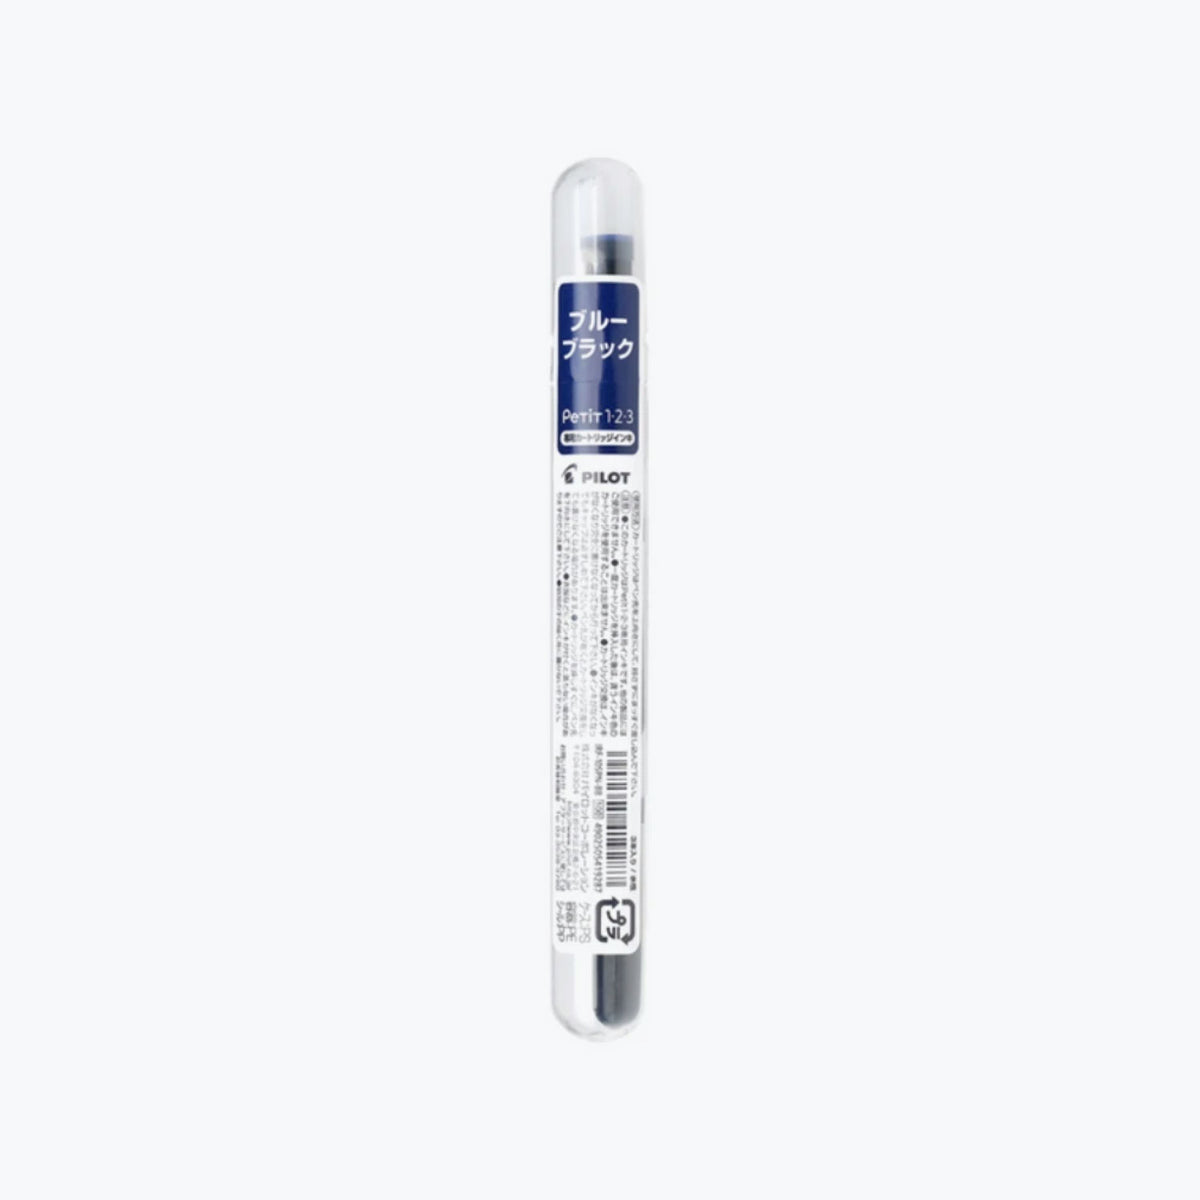 Pilot - Fountain Pen Refill - Petit - Blue-Black <Outgoing>